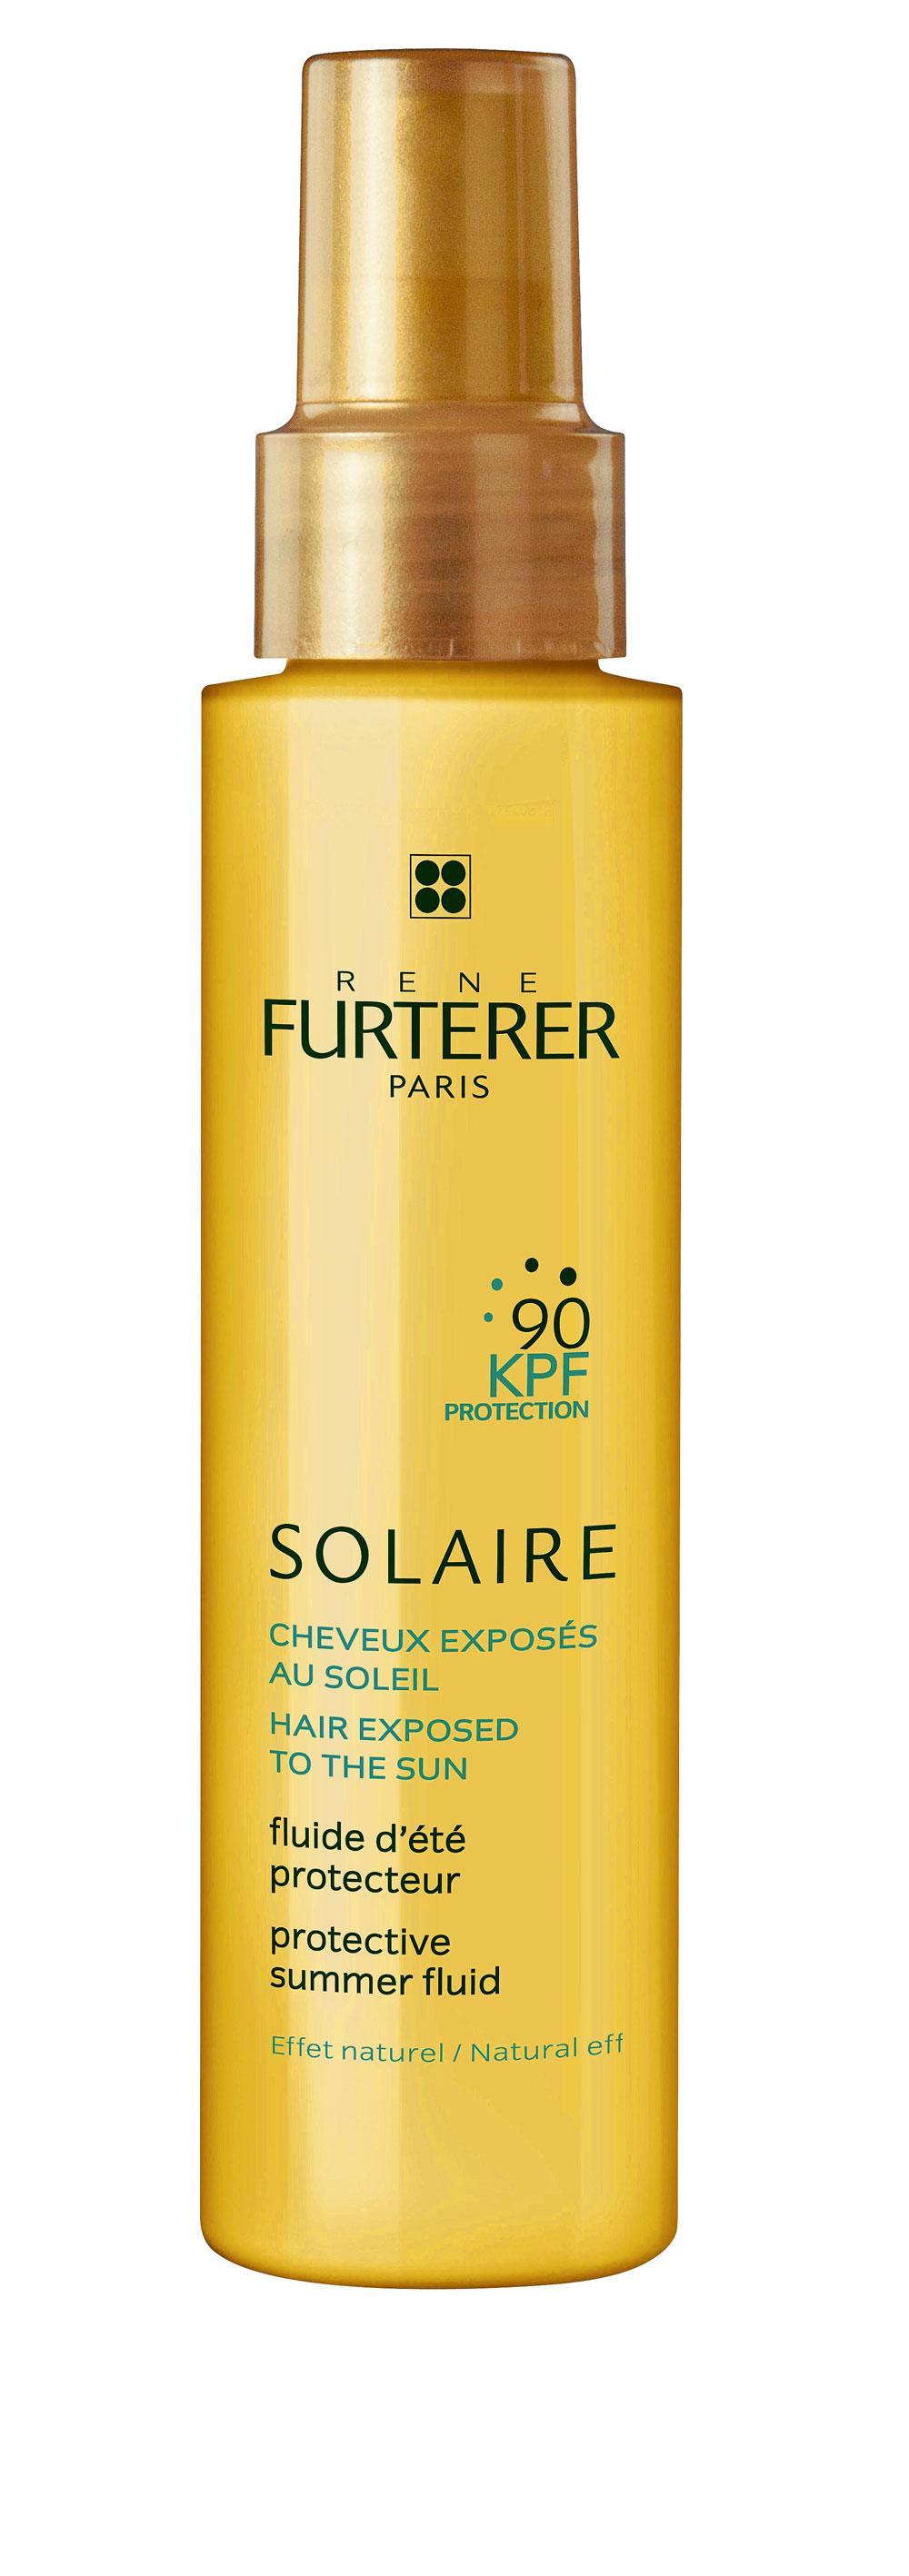 Sun Ritual Protective Summer Fluid Hair Exposed to the Sun (17,50 euro), René Furterer, bij Planet Parfum.